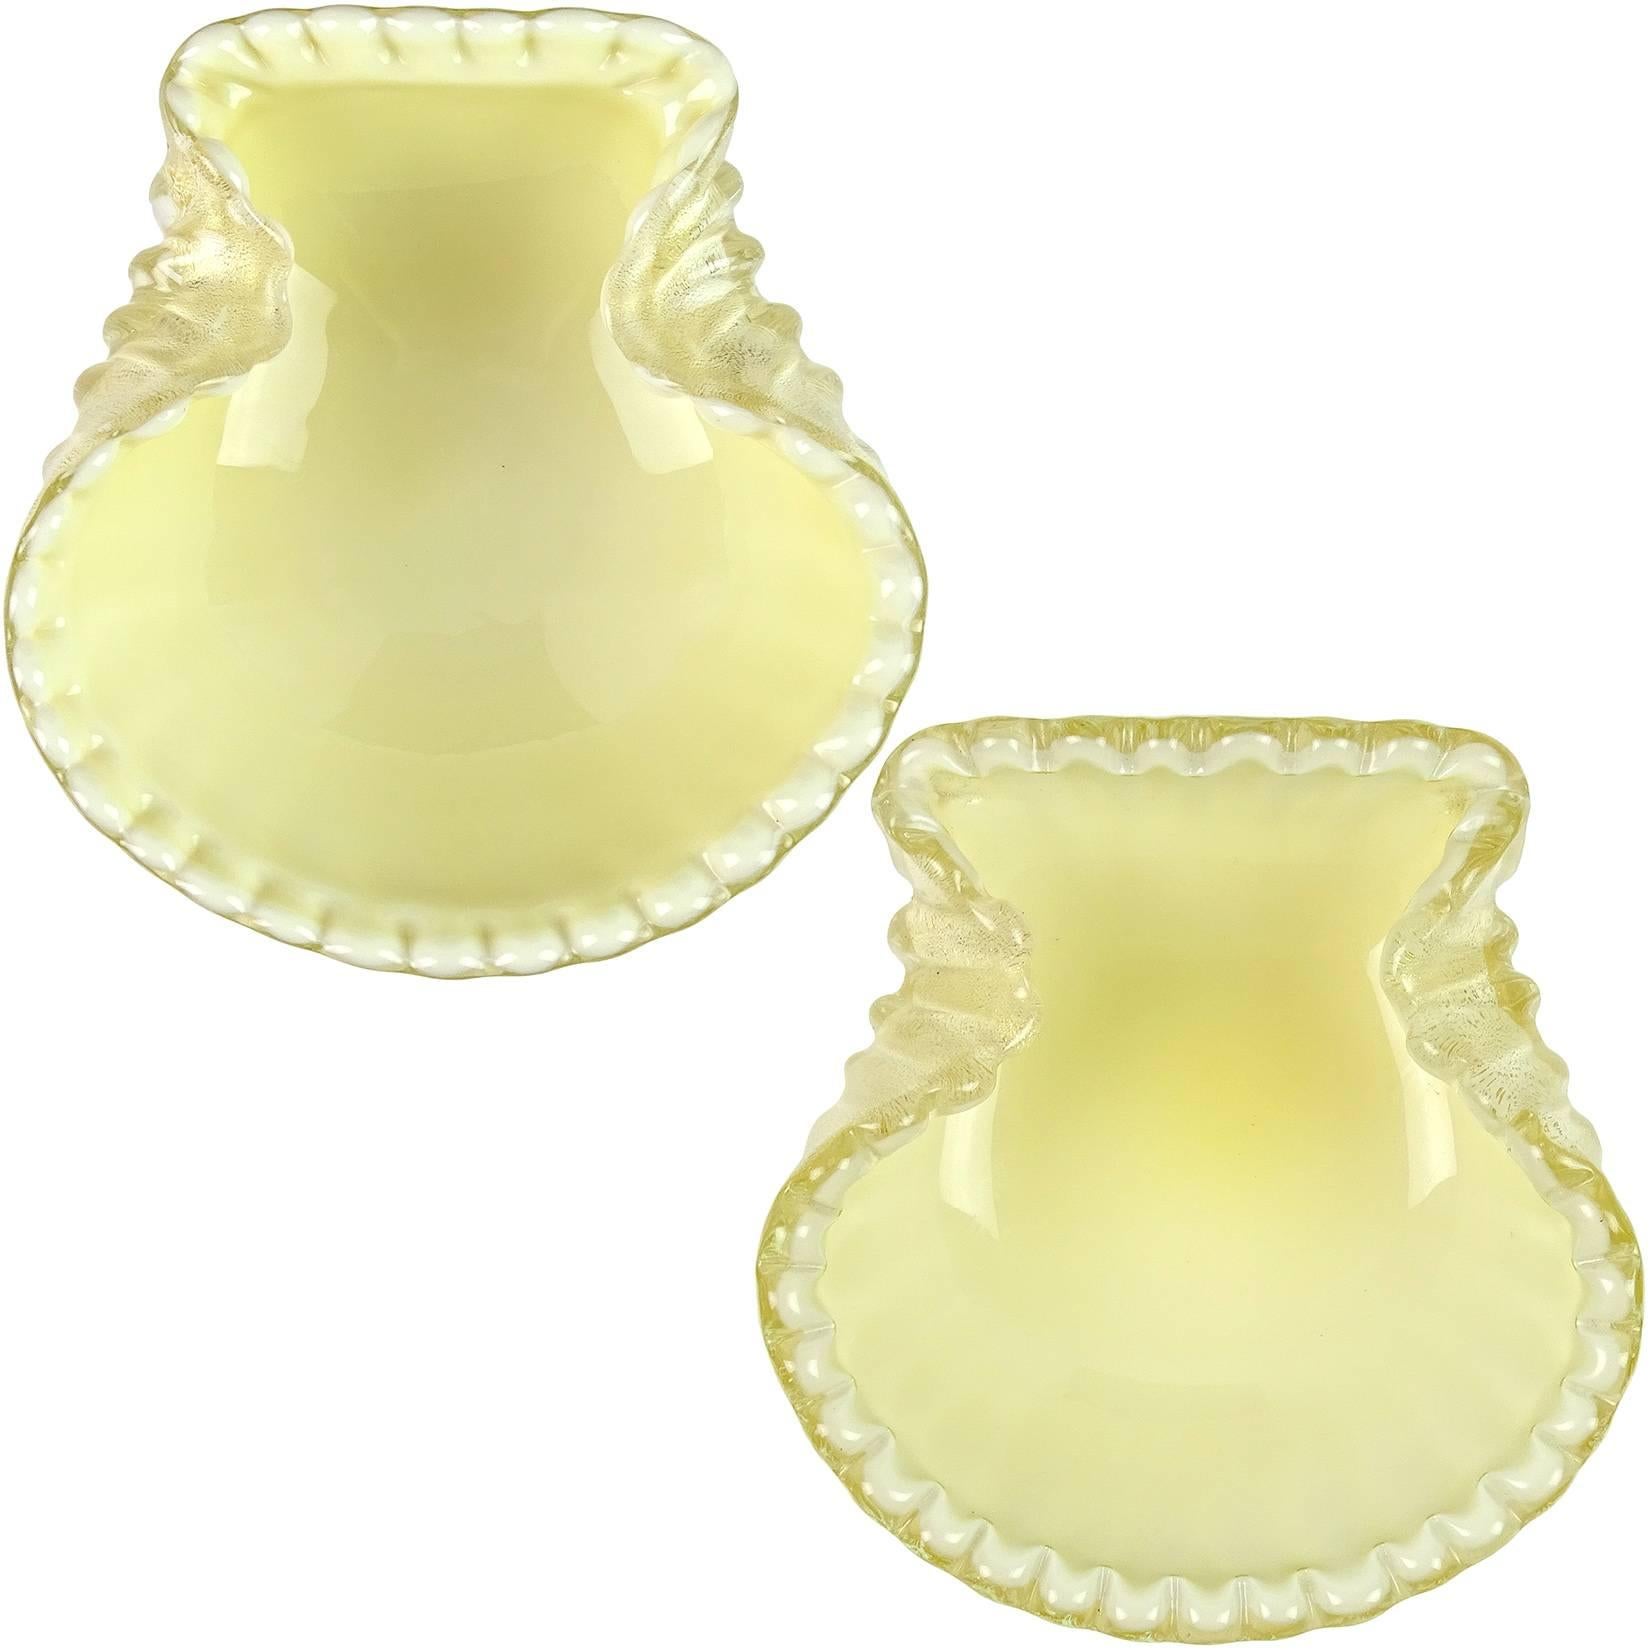 Seguso Murano White Creamy Yellow Gold Flecks Italian Art Glass Seashell Bowl 1